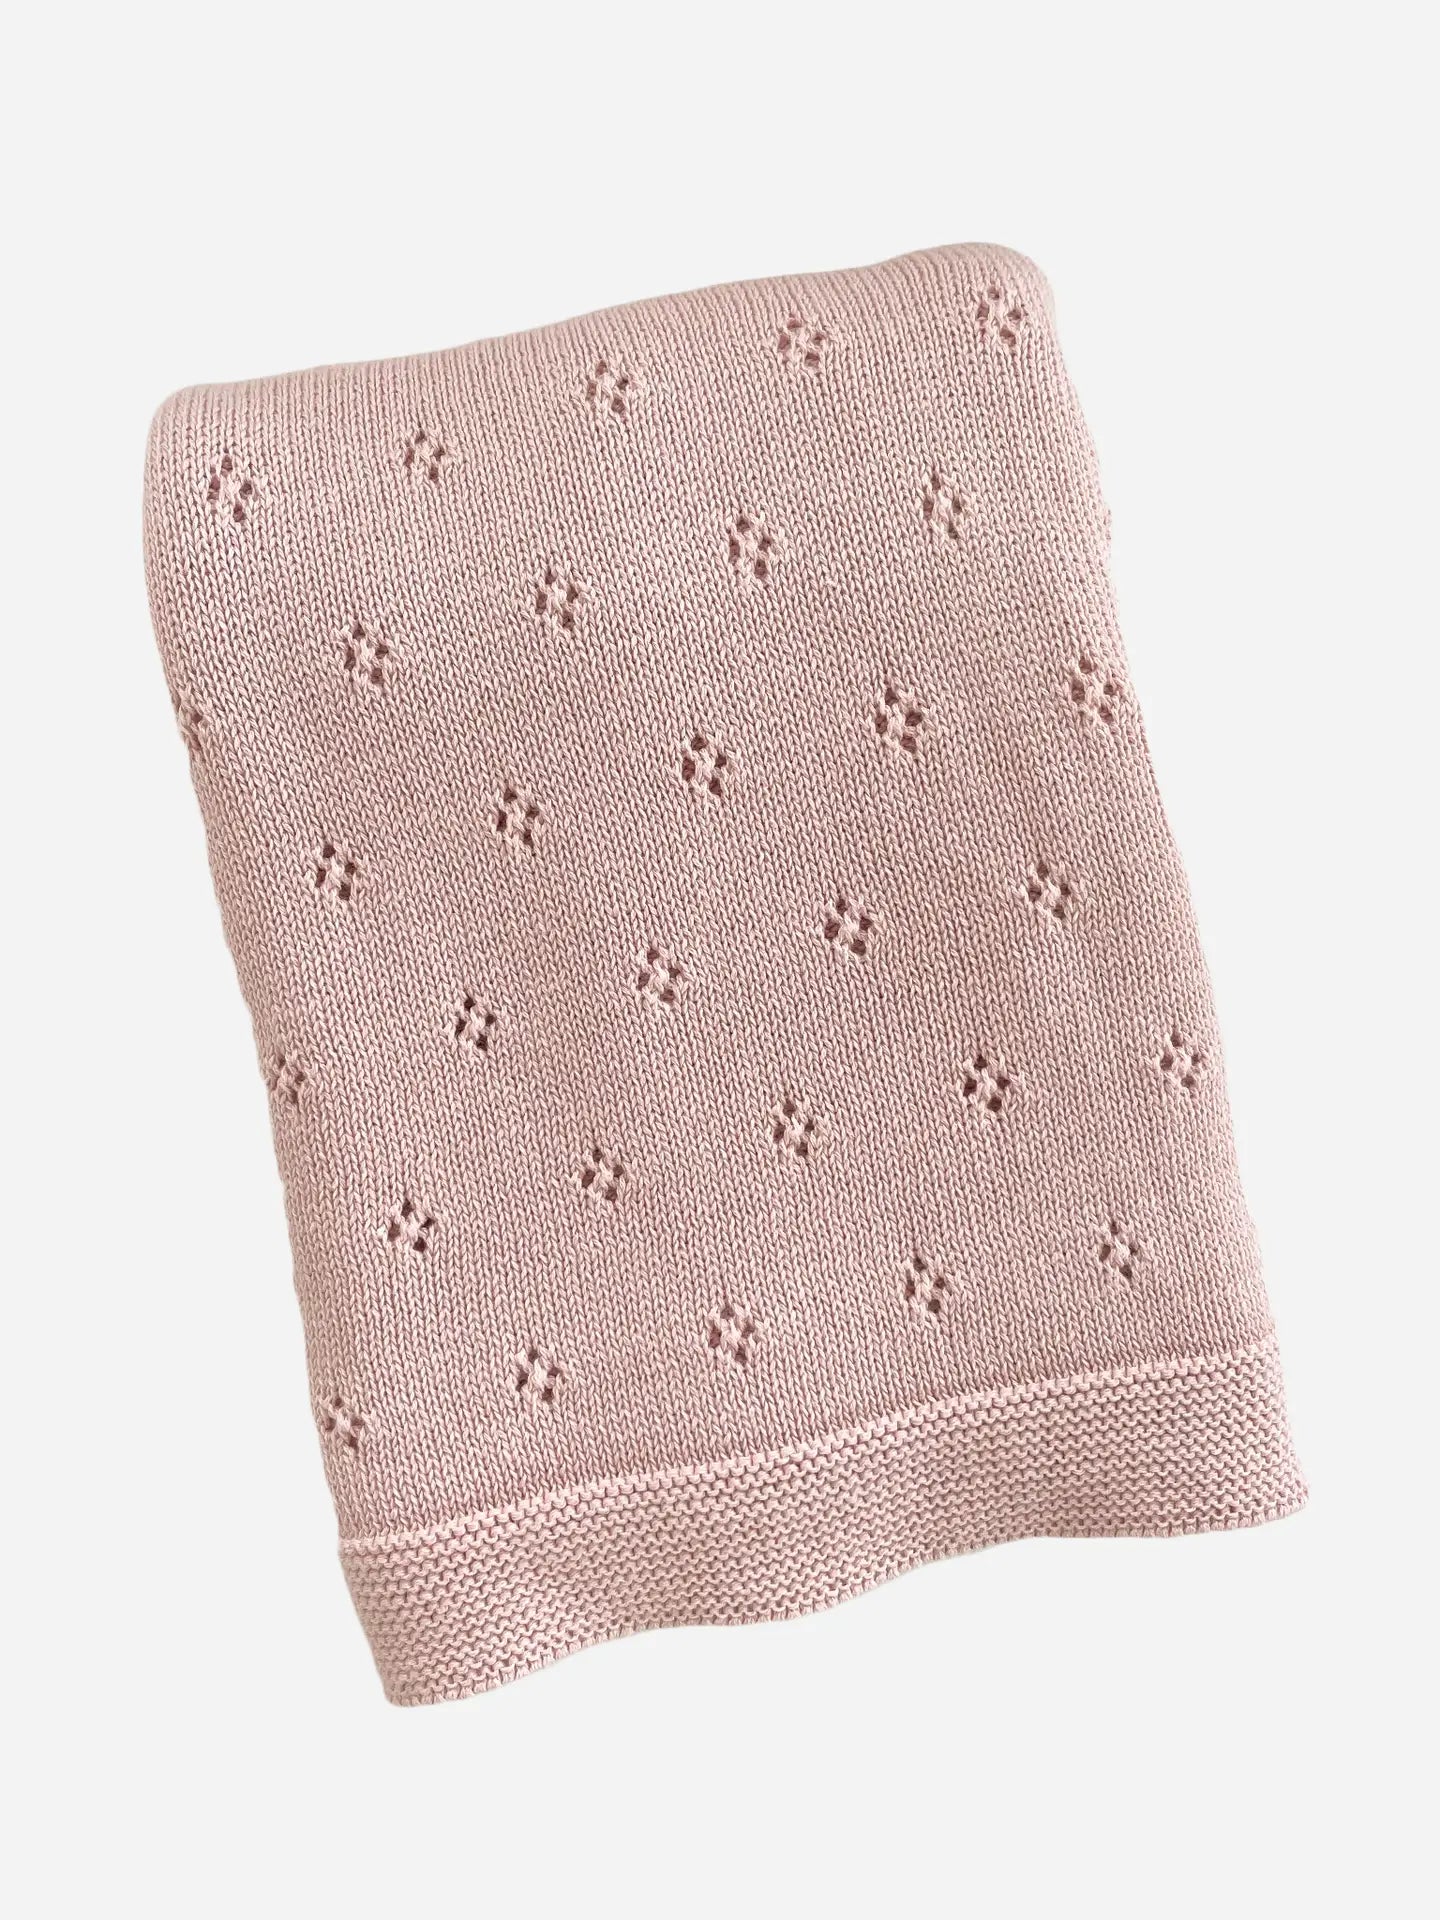 Organic Heirloom Pique Blanket in Blush